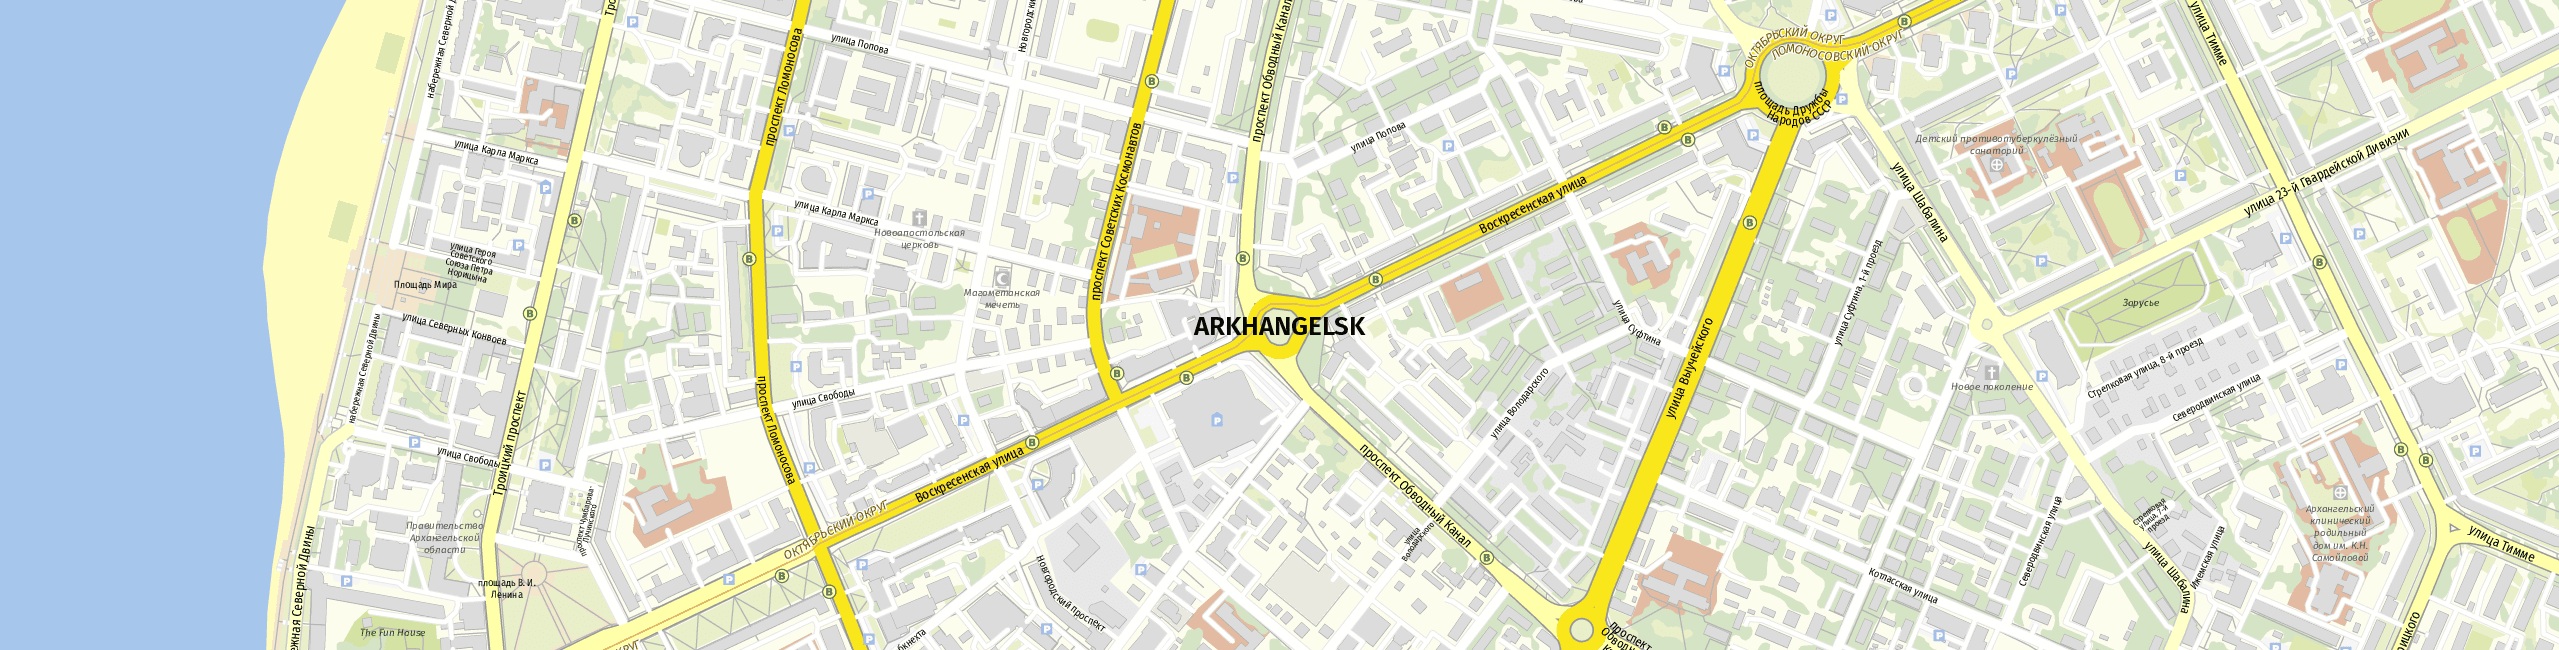 Stadtplan Arkhangelsk zum Downloaden.